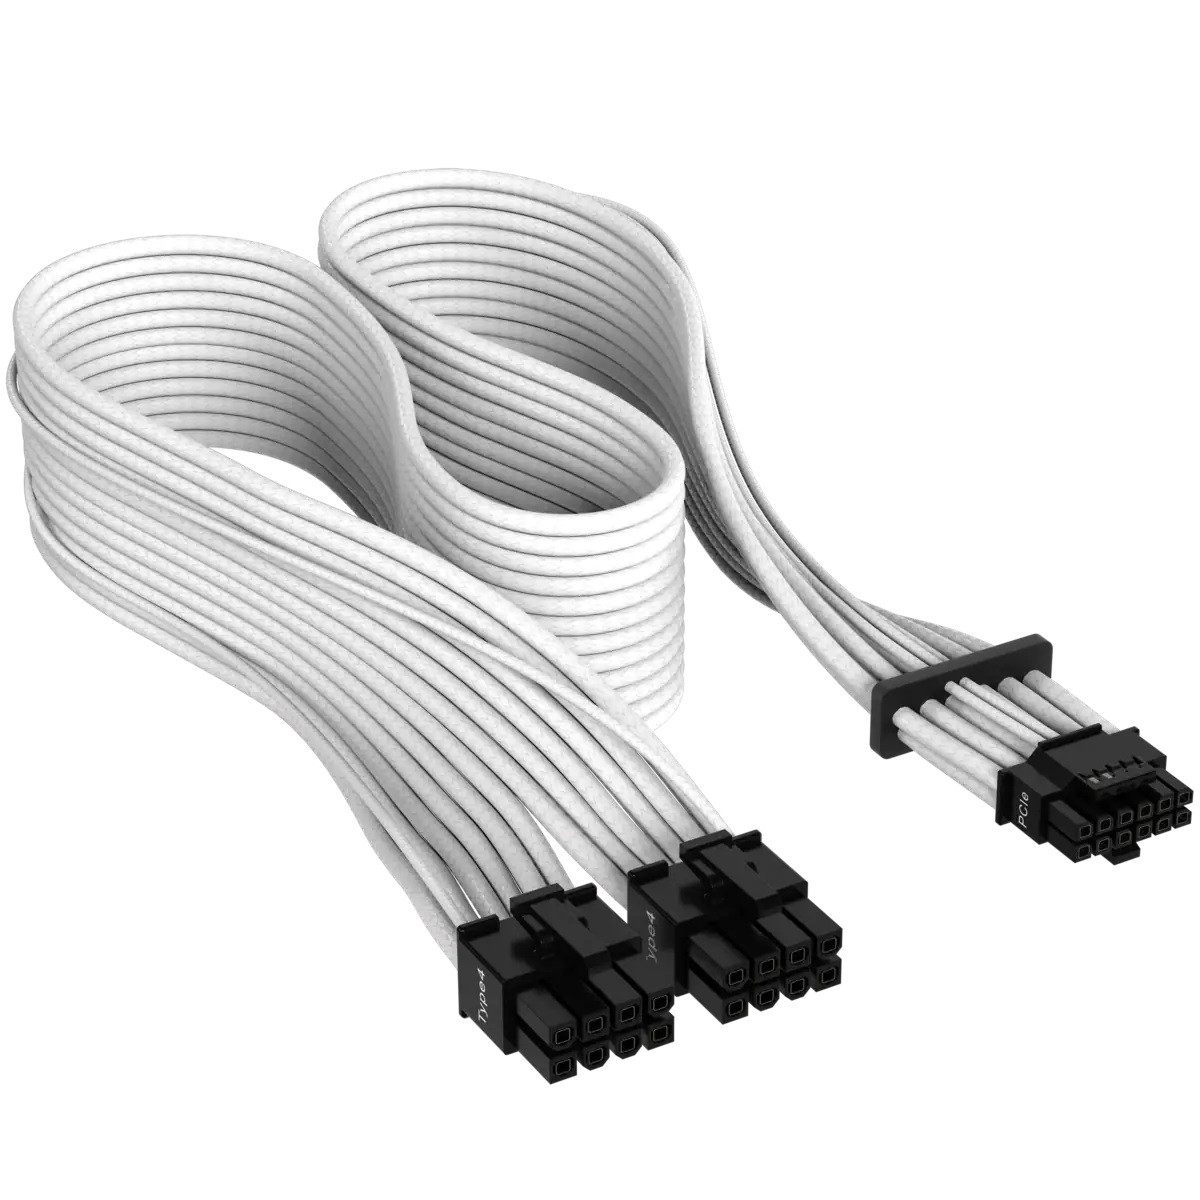 Corsair: Custom 12VHPWR cable for current modular power supplies